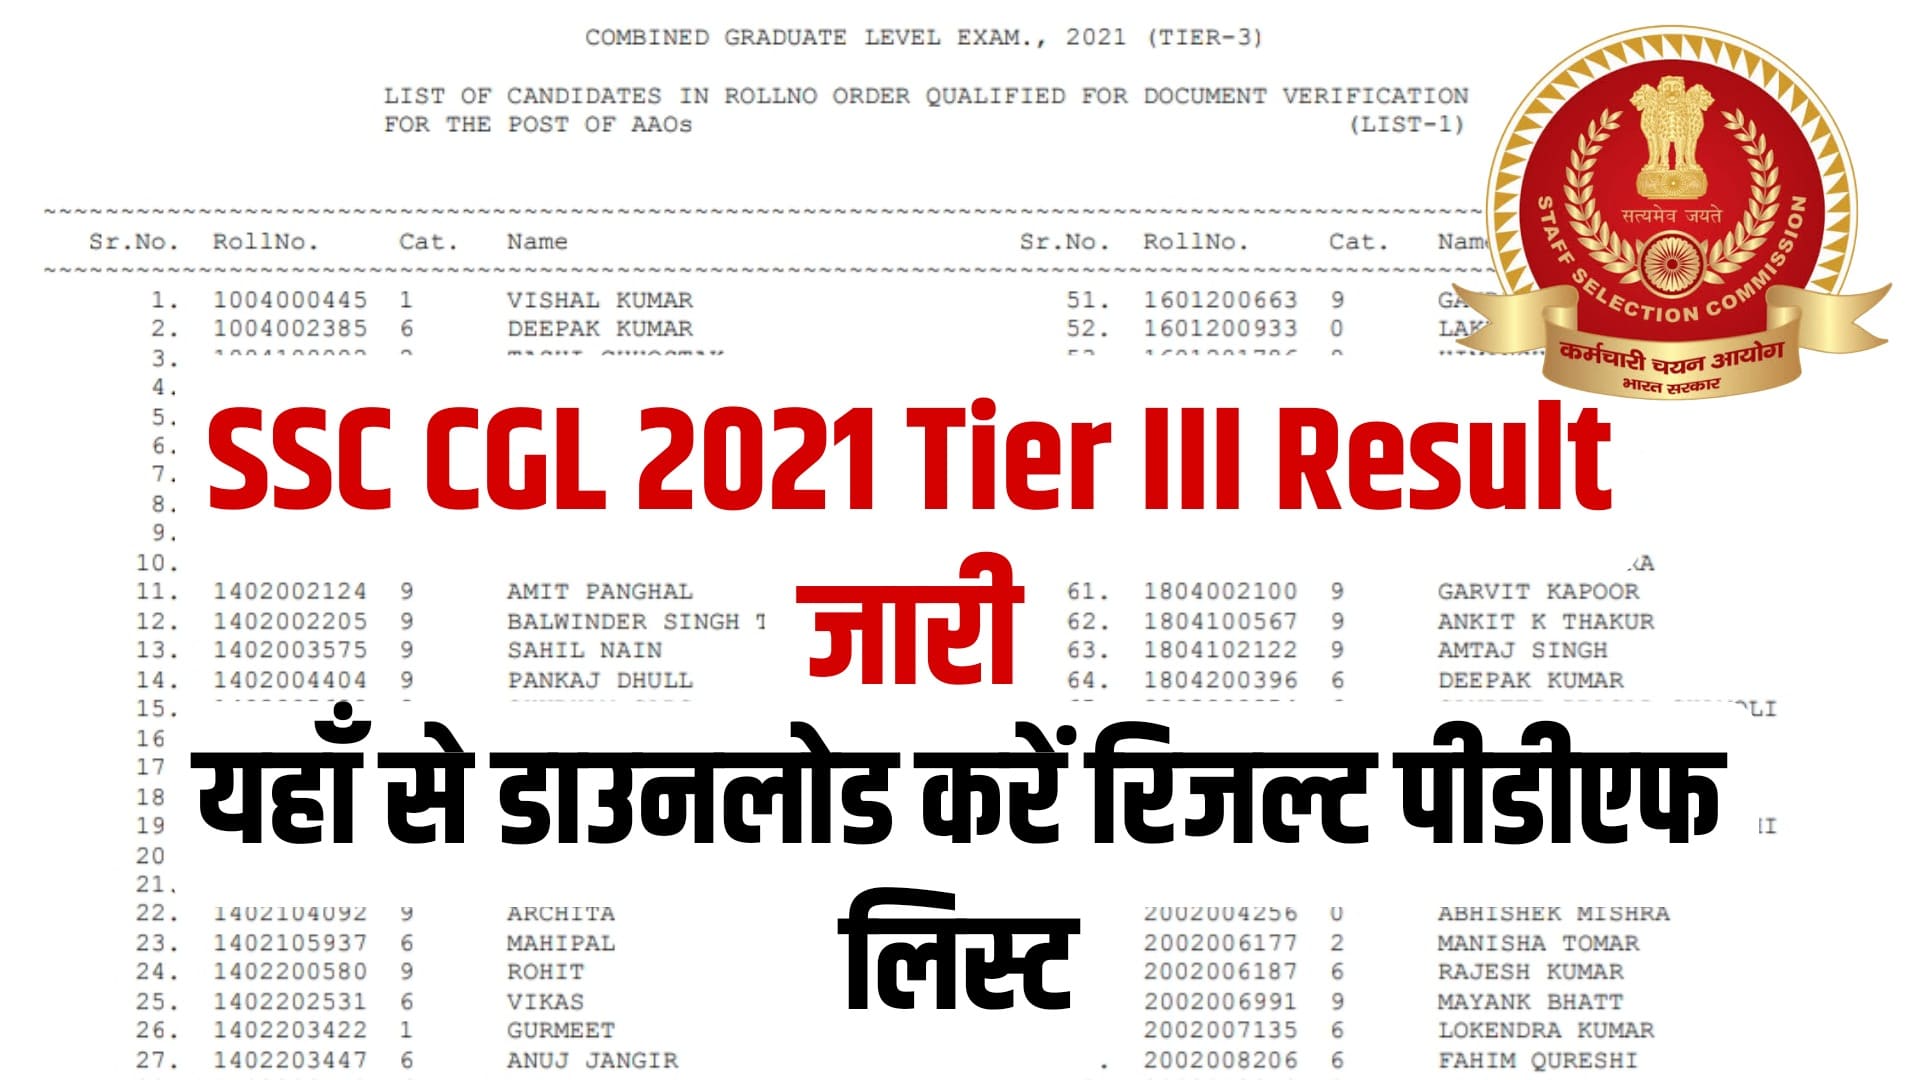 SSC CGL 2021 Tier III Result | एसएससी सिजियल टियर III रिजल्ट